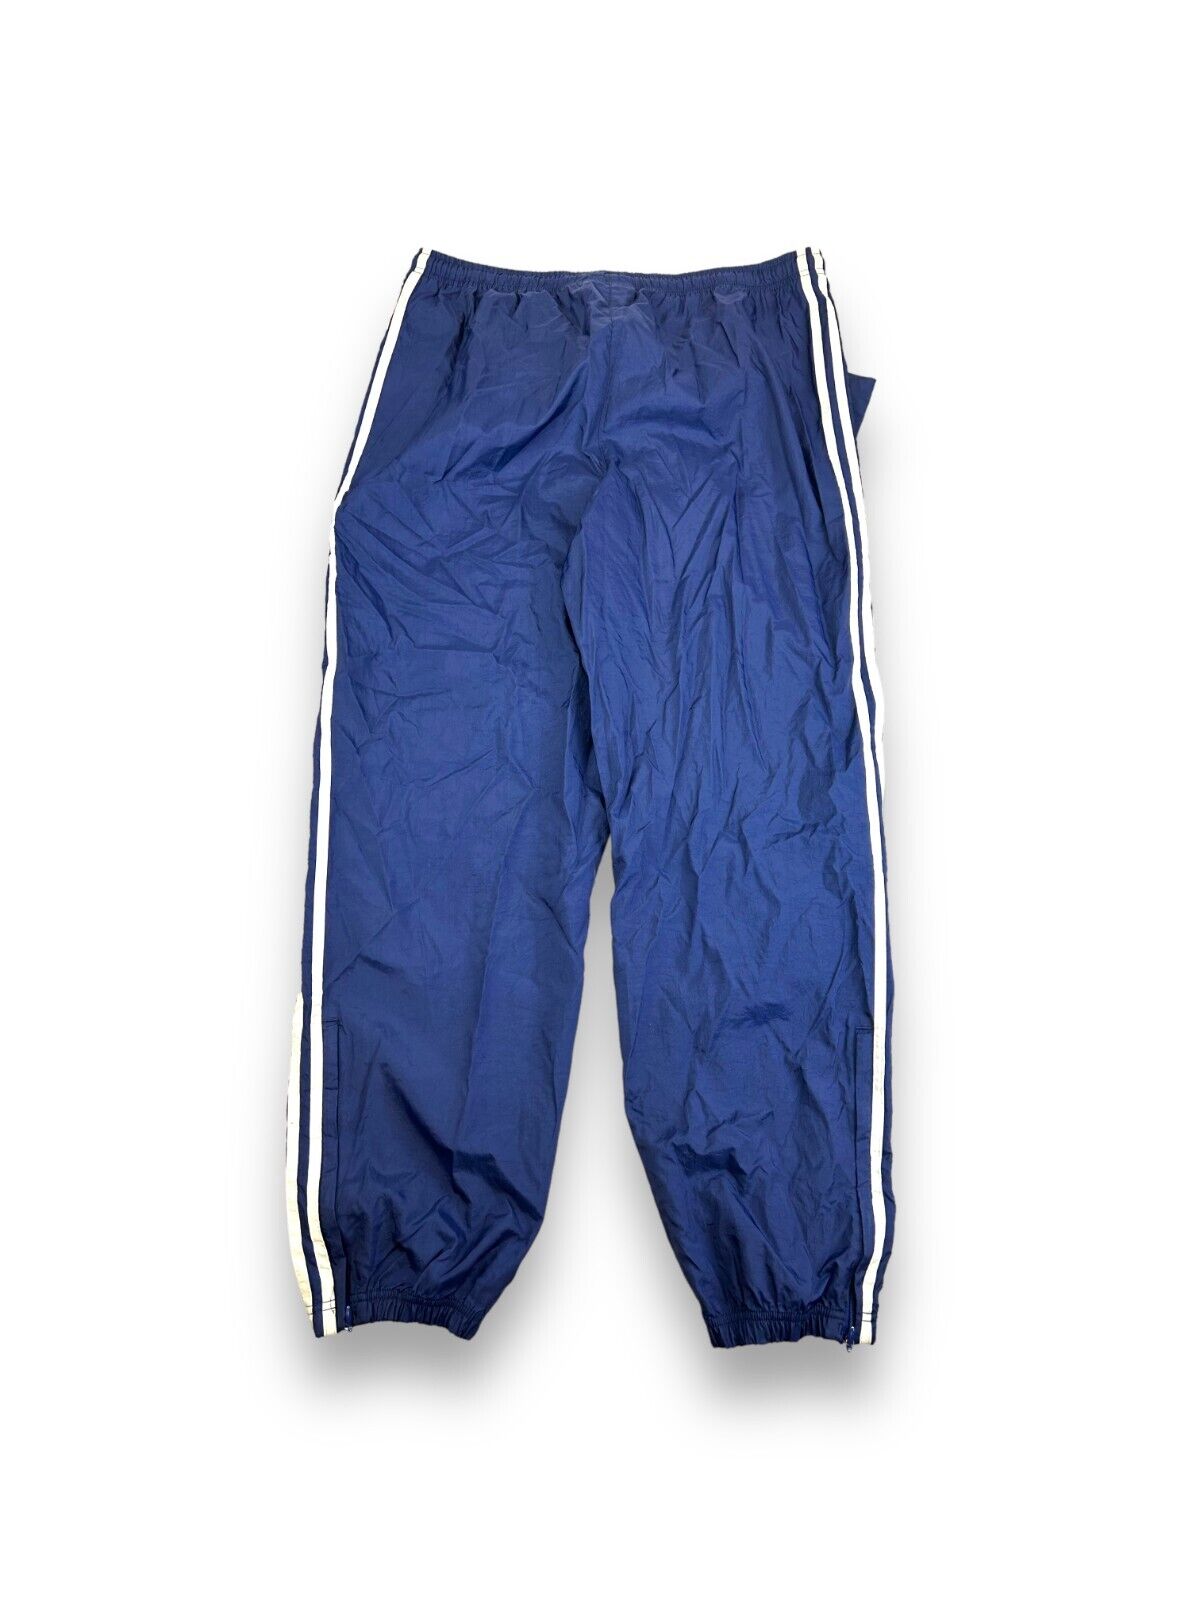 Vintage 90s Adidas Embroidered Logo Nylon Track Pants Size L 37W Blue